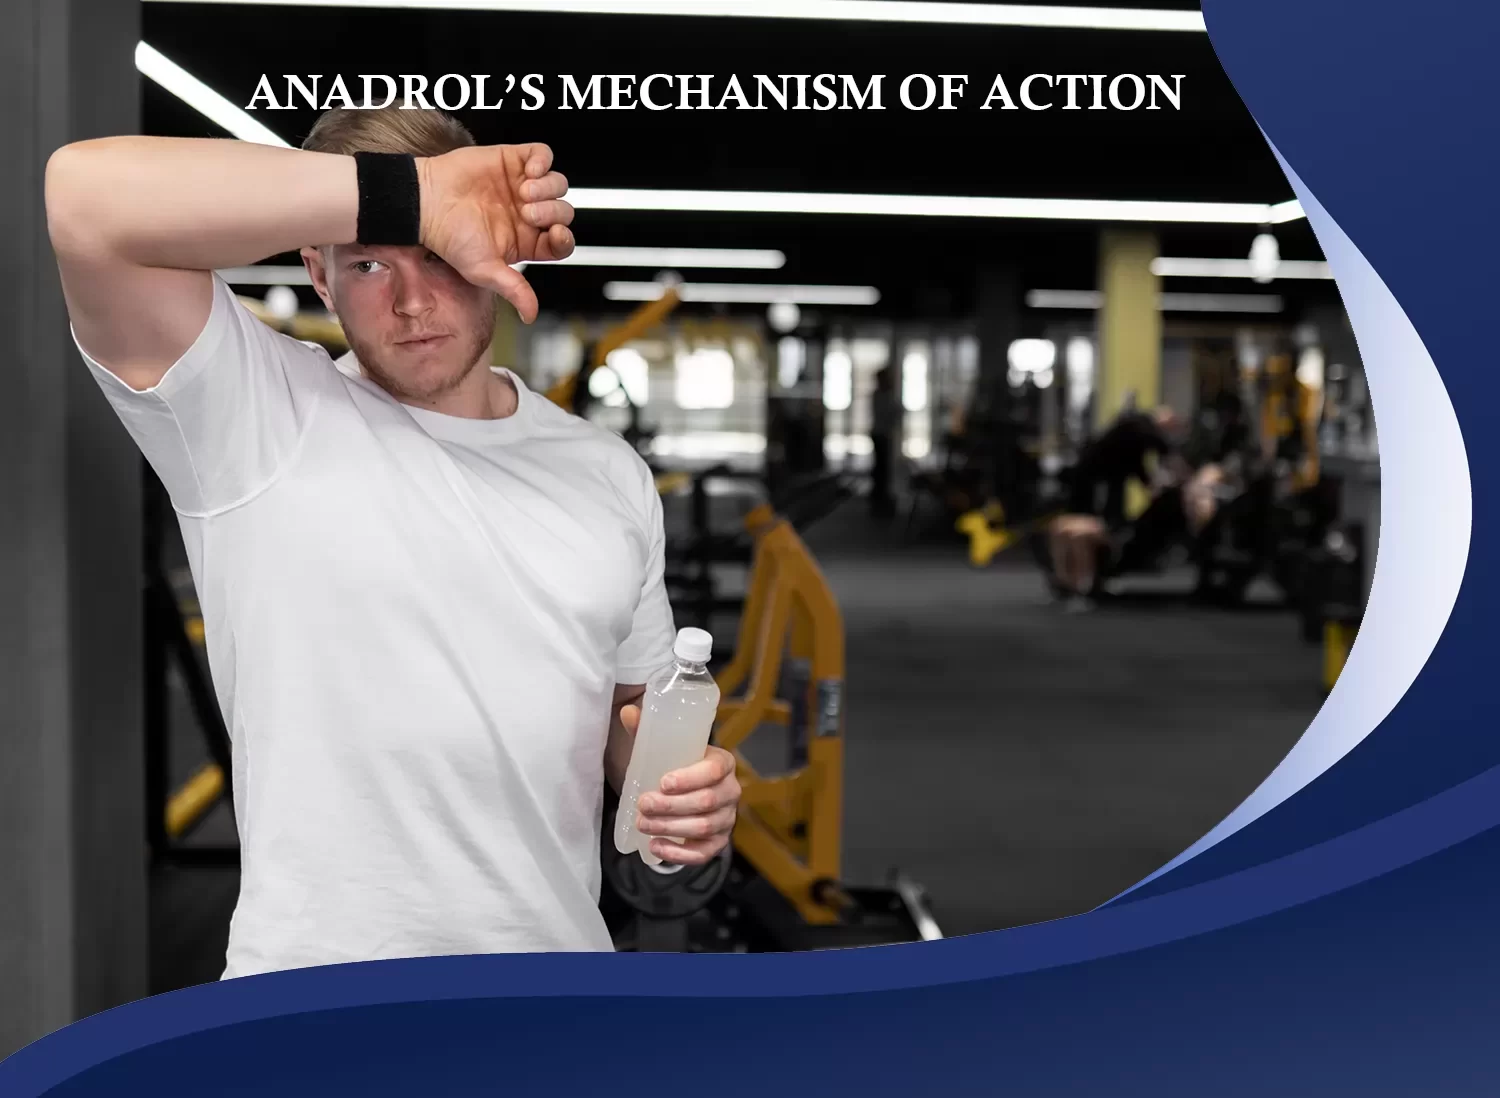 Anadrol’s Mechanism of Action